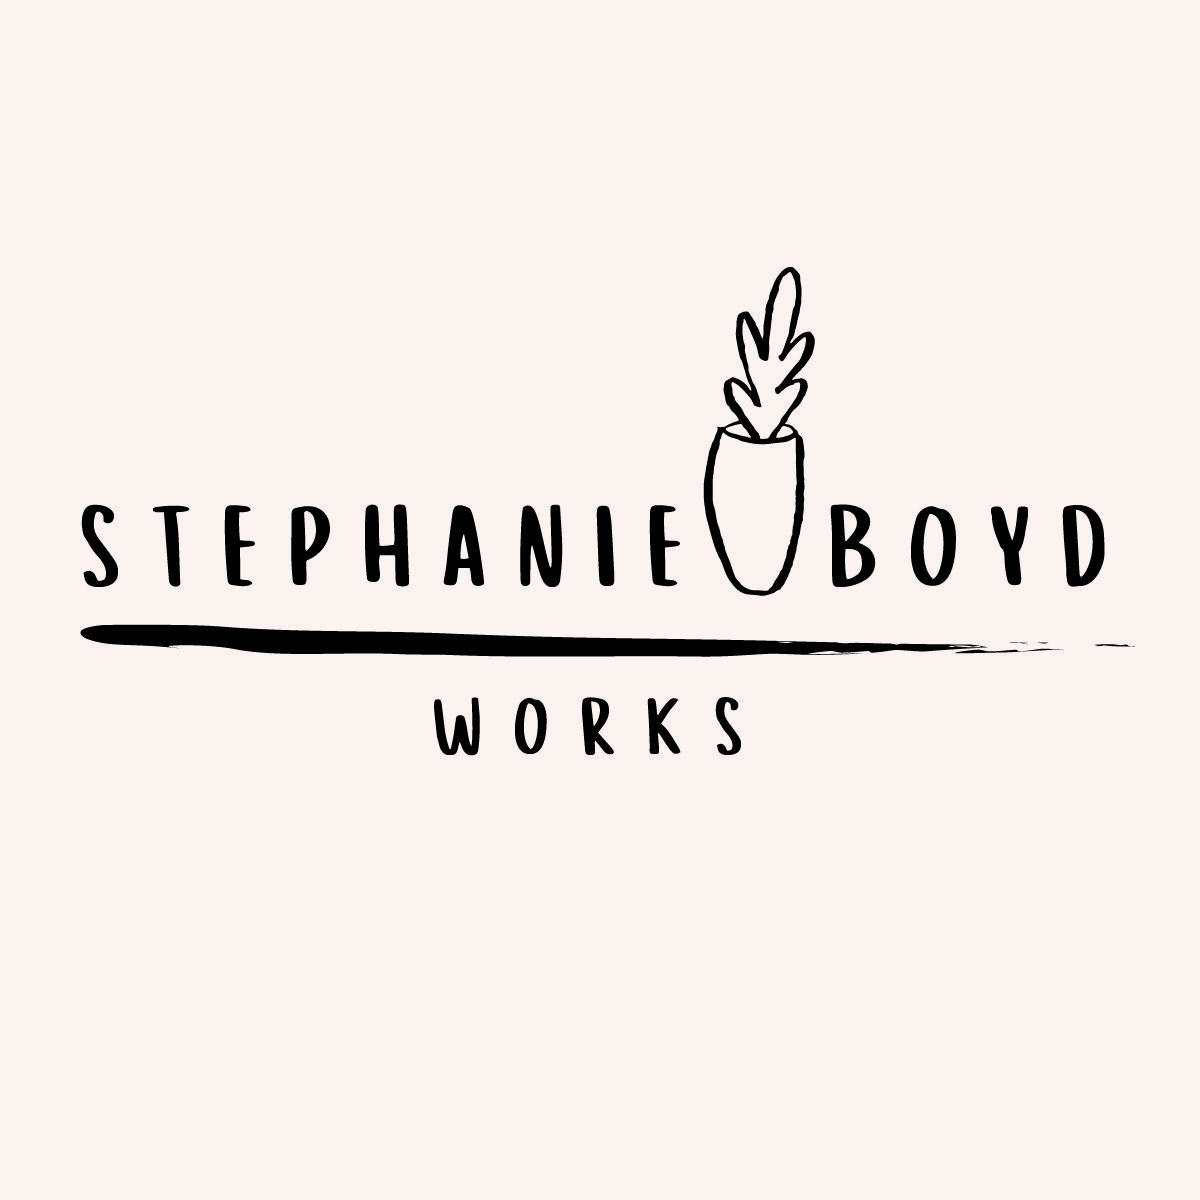 Stephanie Logo - Logo Design: Stephanie Boyd Works — The Homegrown Studio